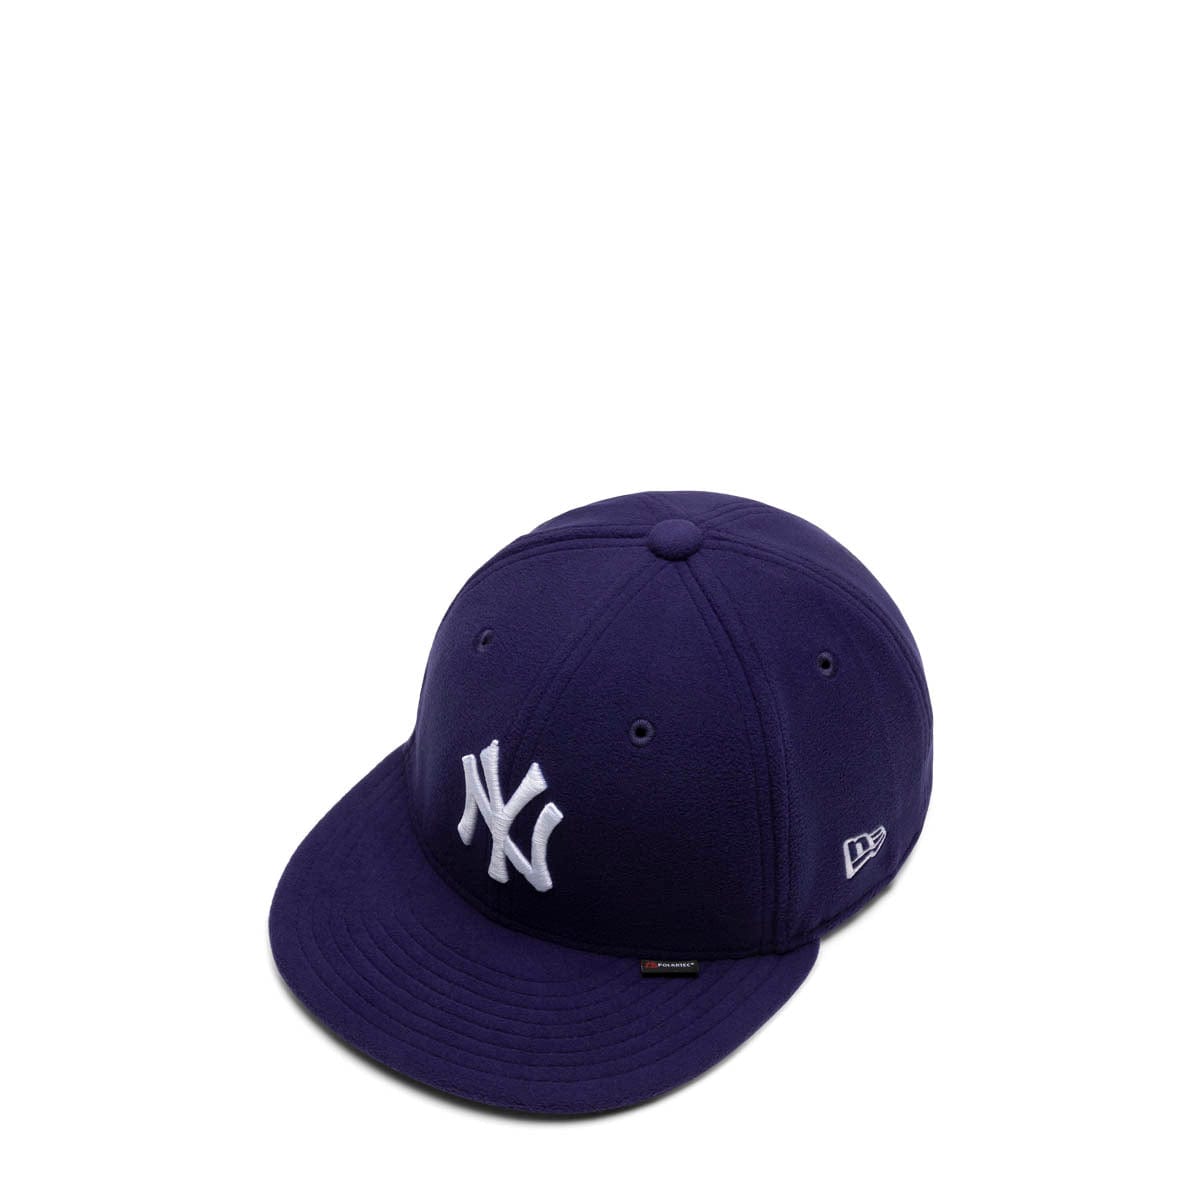 New York Yankees Hats for Women